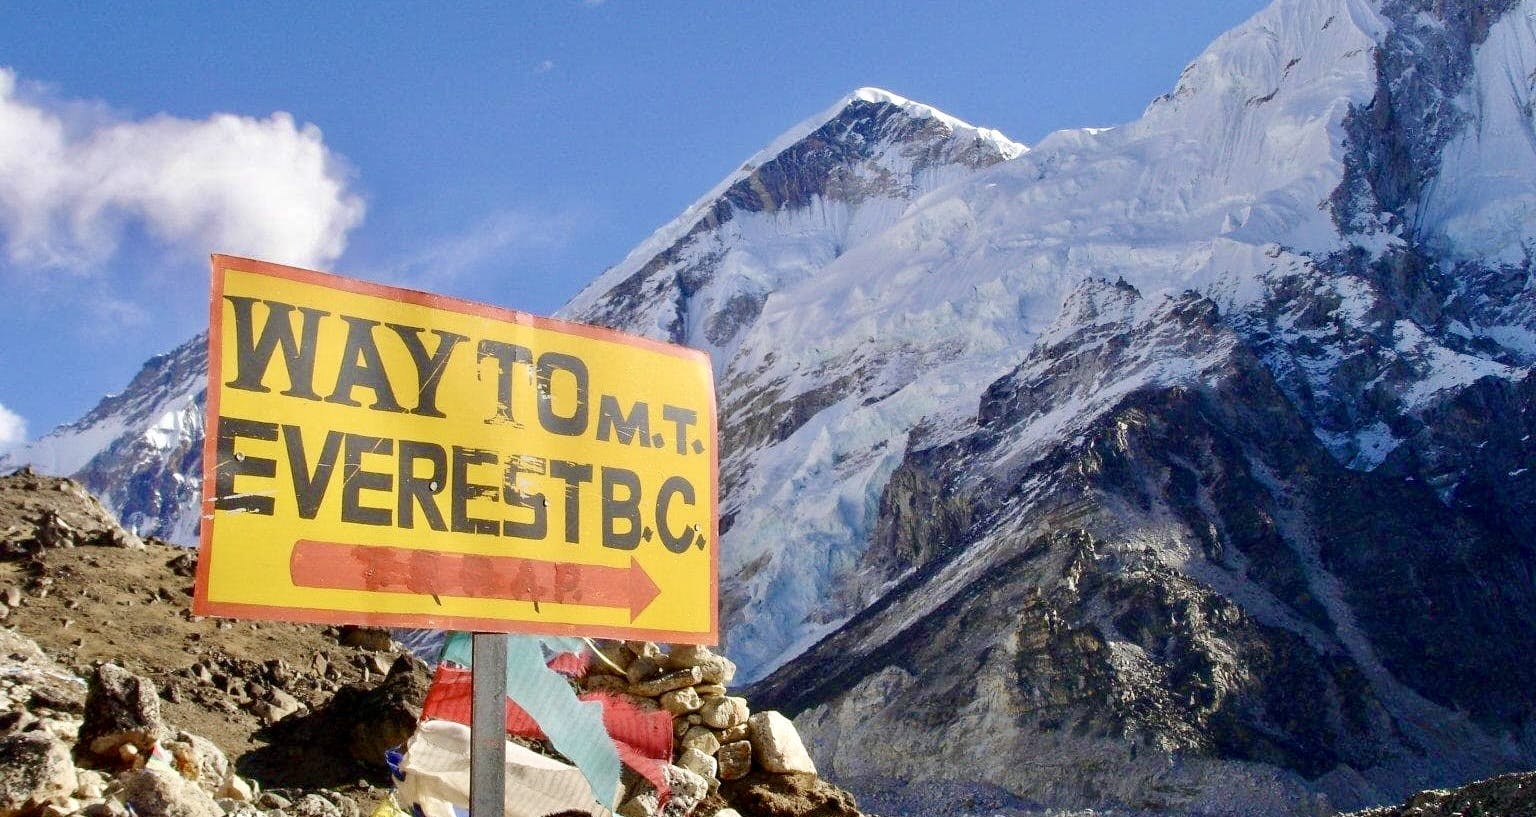 Lobuche East Peak Climbing with Everest Base Camp